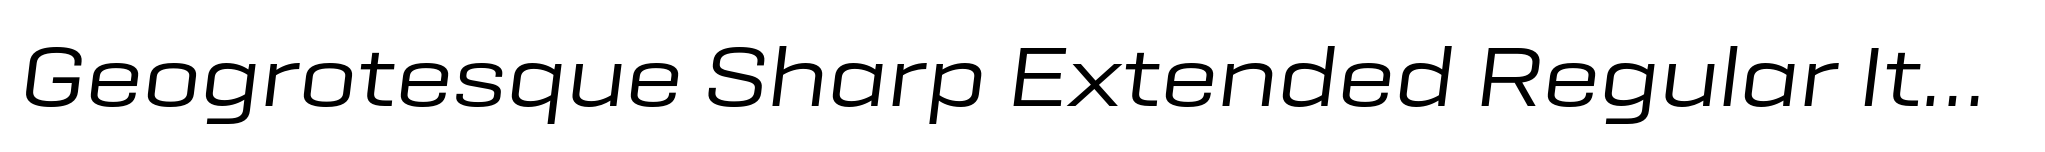 Geogrotesque Sharp Extended Regular Italic image